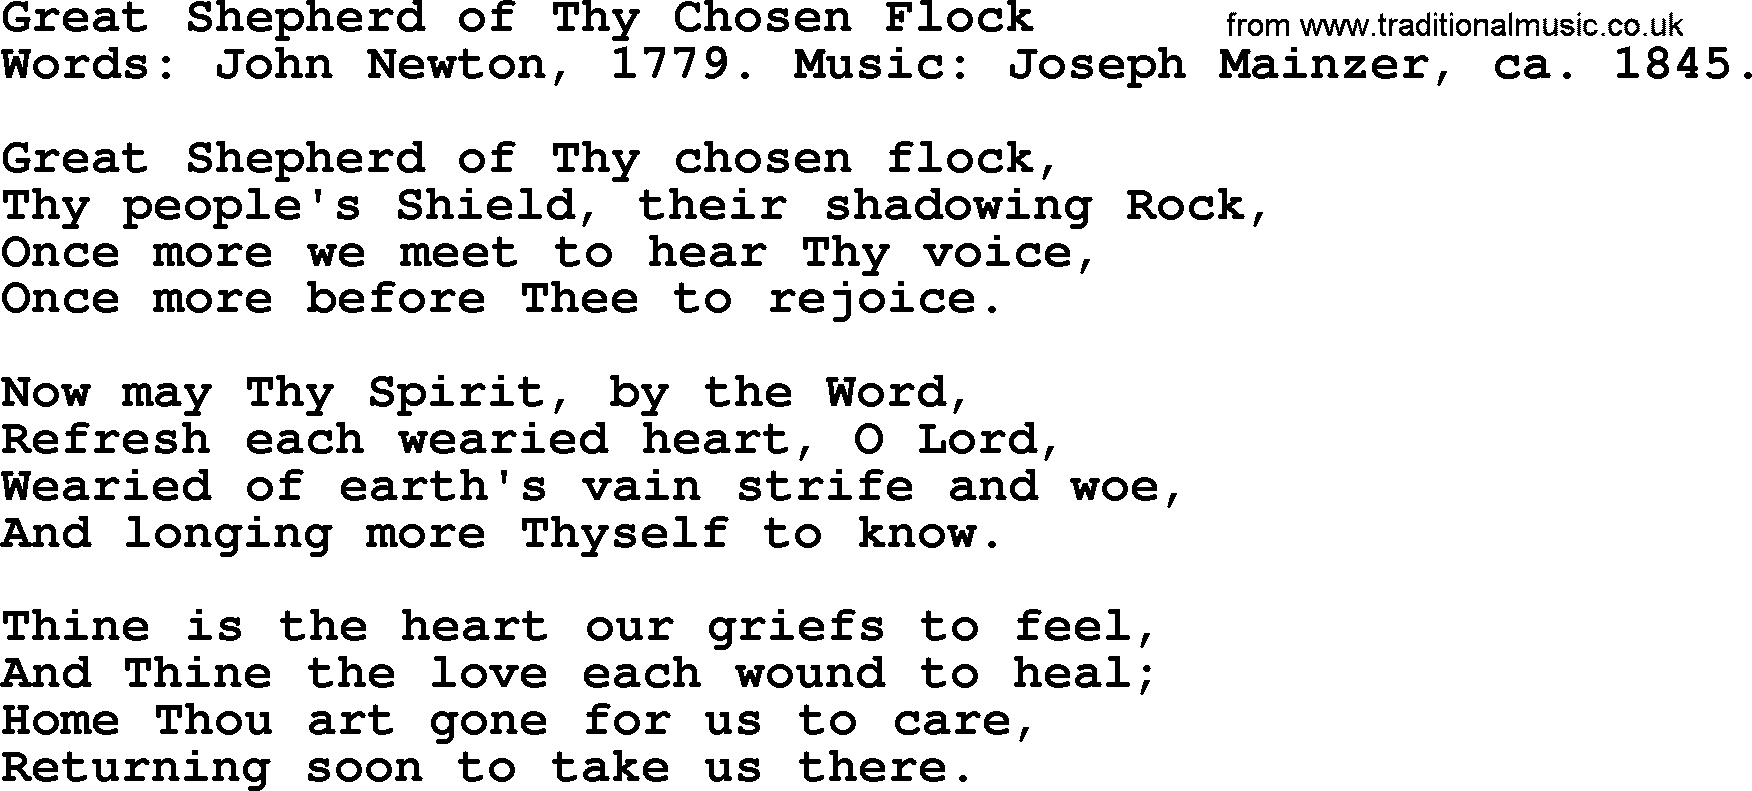 John Newton hymn: Great Shepherd Of Thy Chosen Flock, lyrics